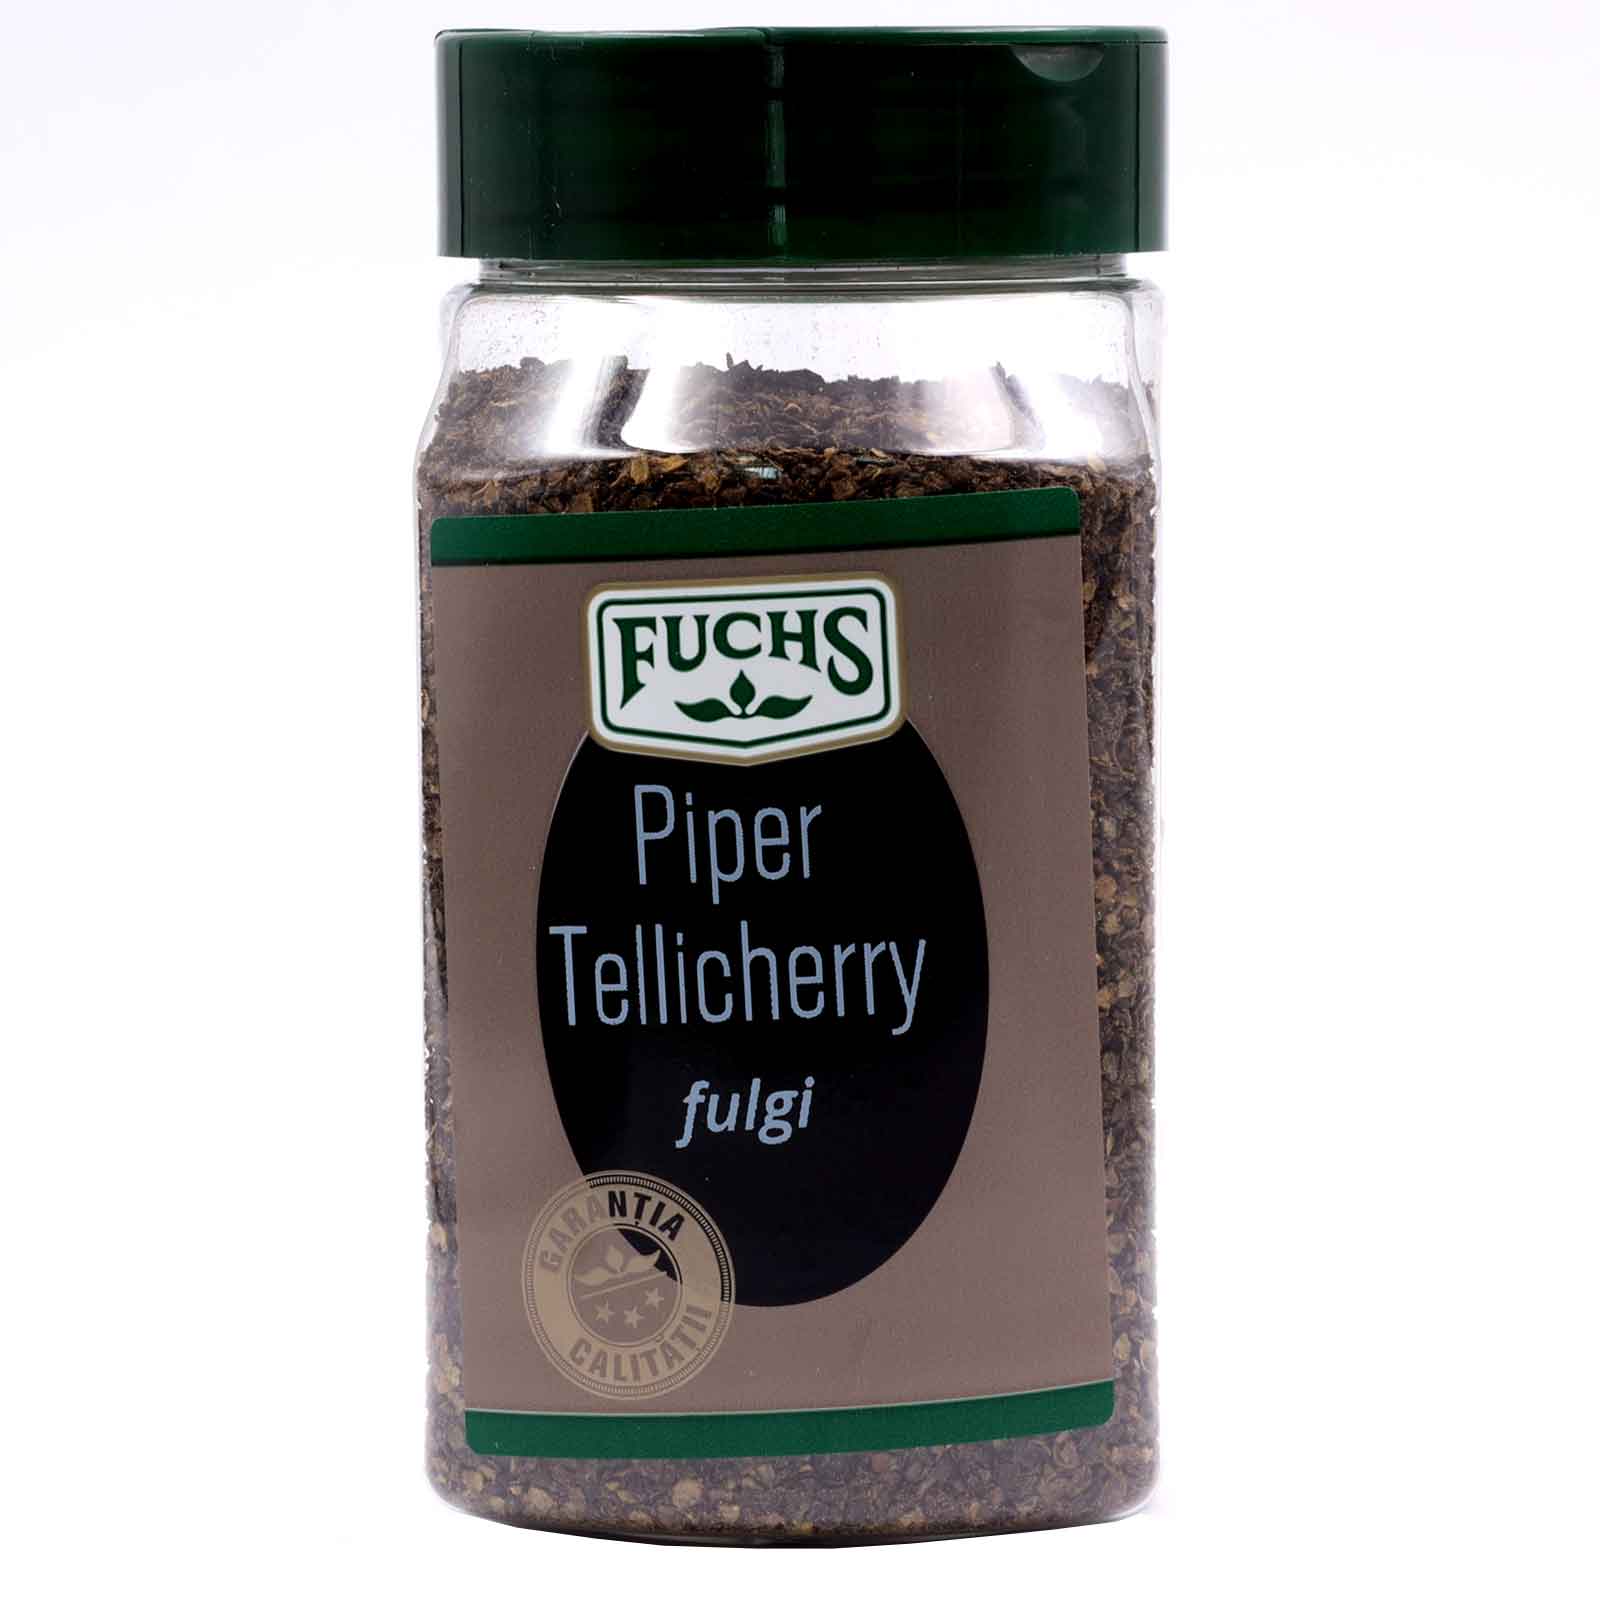 Piper Tellicherry fulgi, Fuchs, borcan mic, 145 g